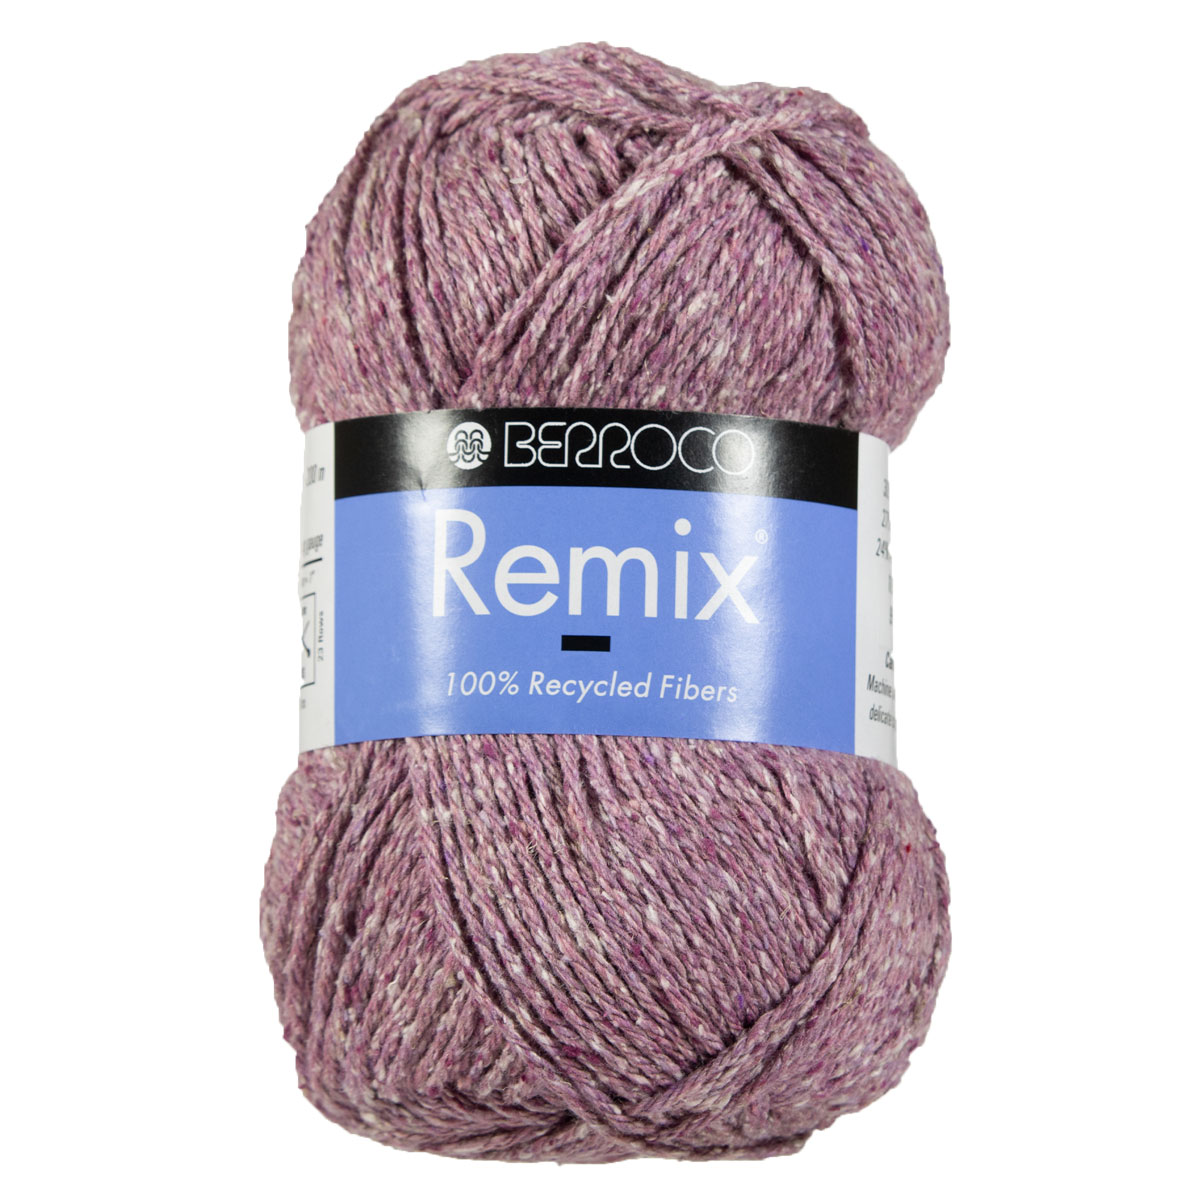 Berroco Remix Yarn - 3971 Cameo Pink at Jimmy Beans Wool